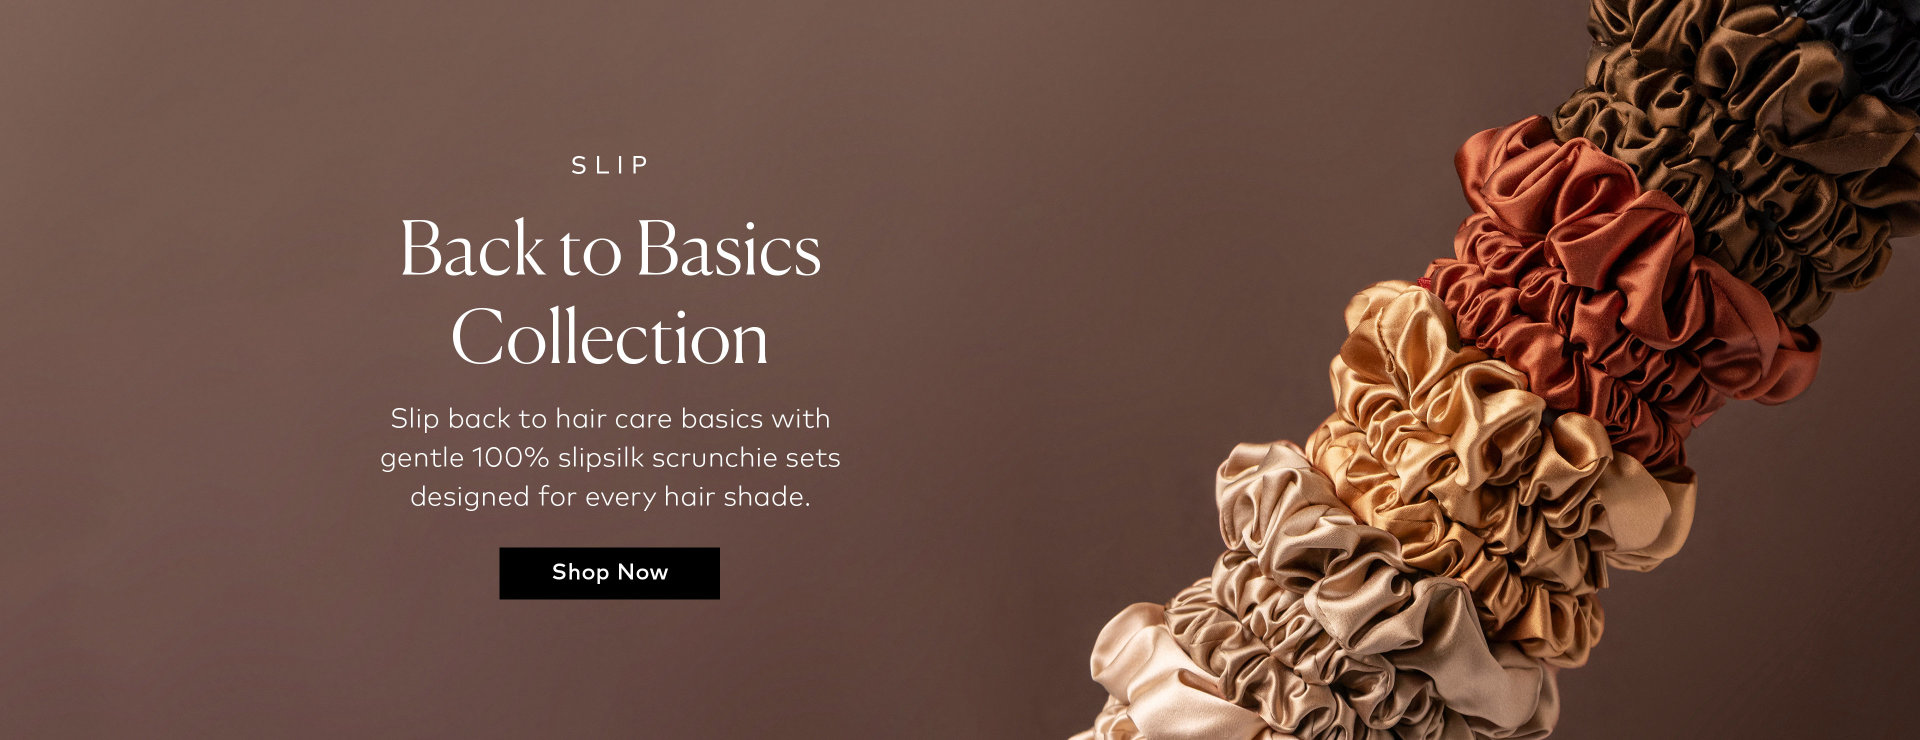 Shop the Slip Back to Basics Collection on Beautylish.com